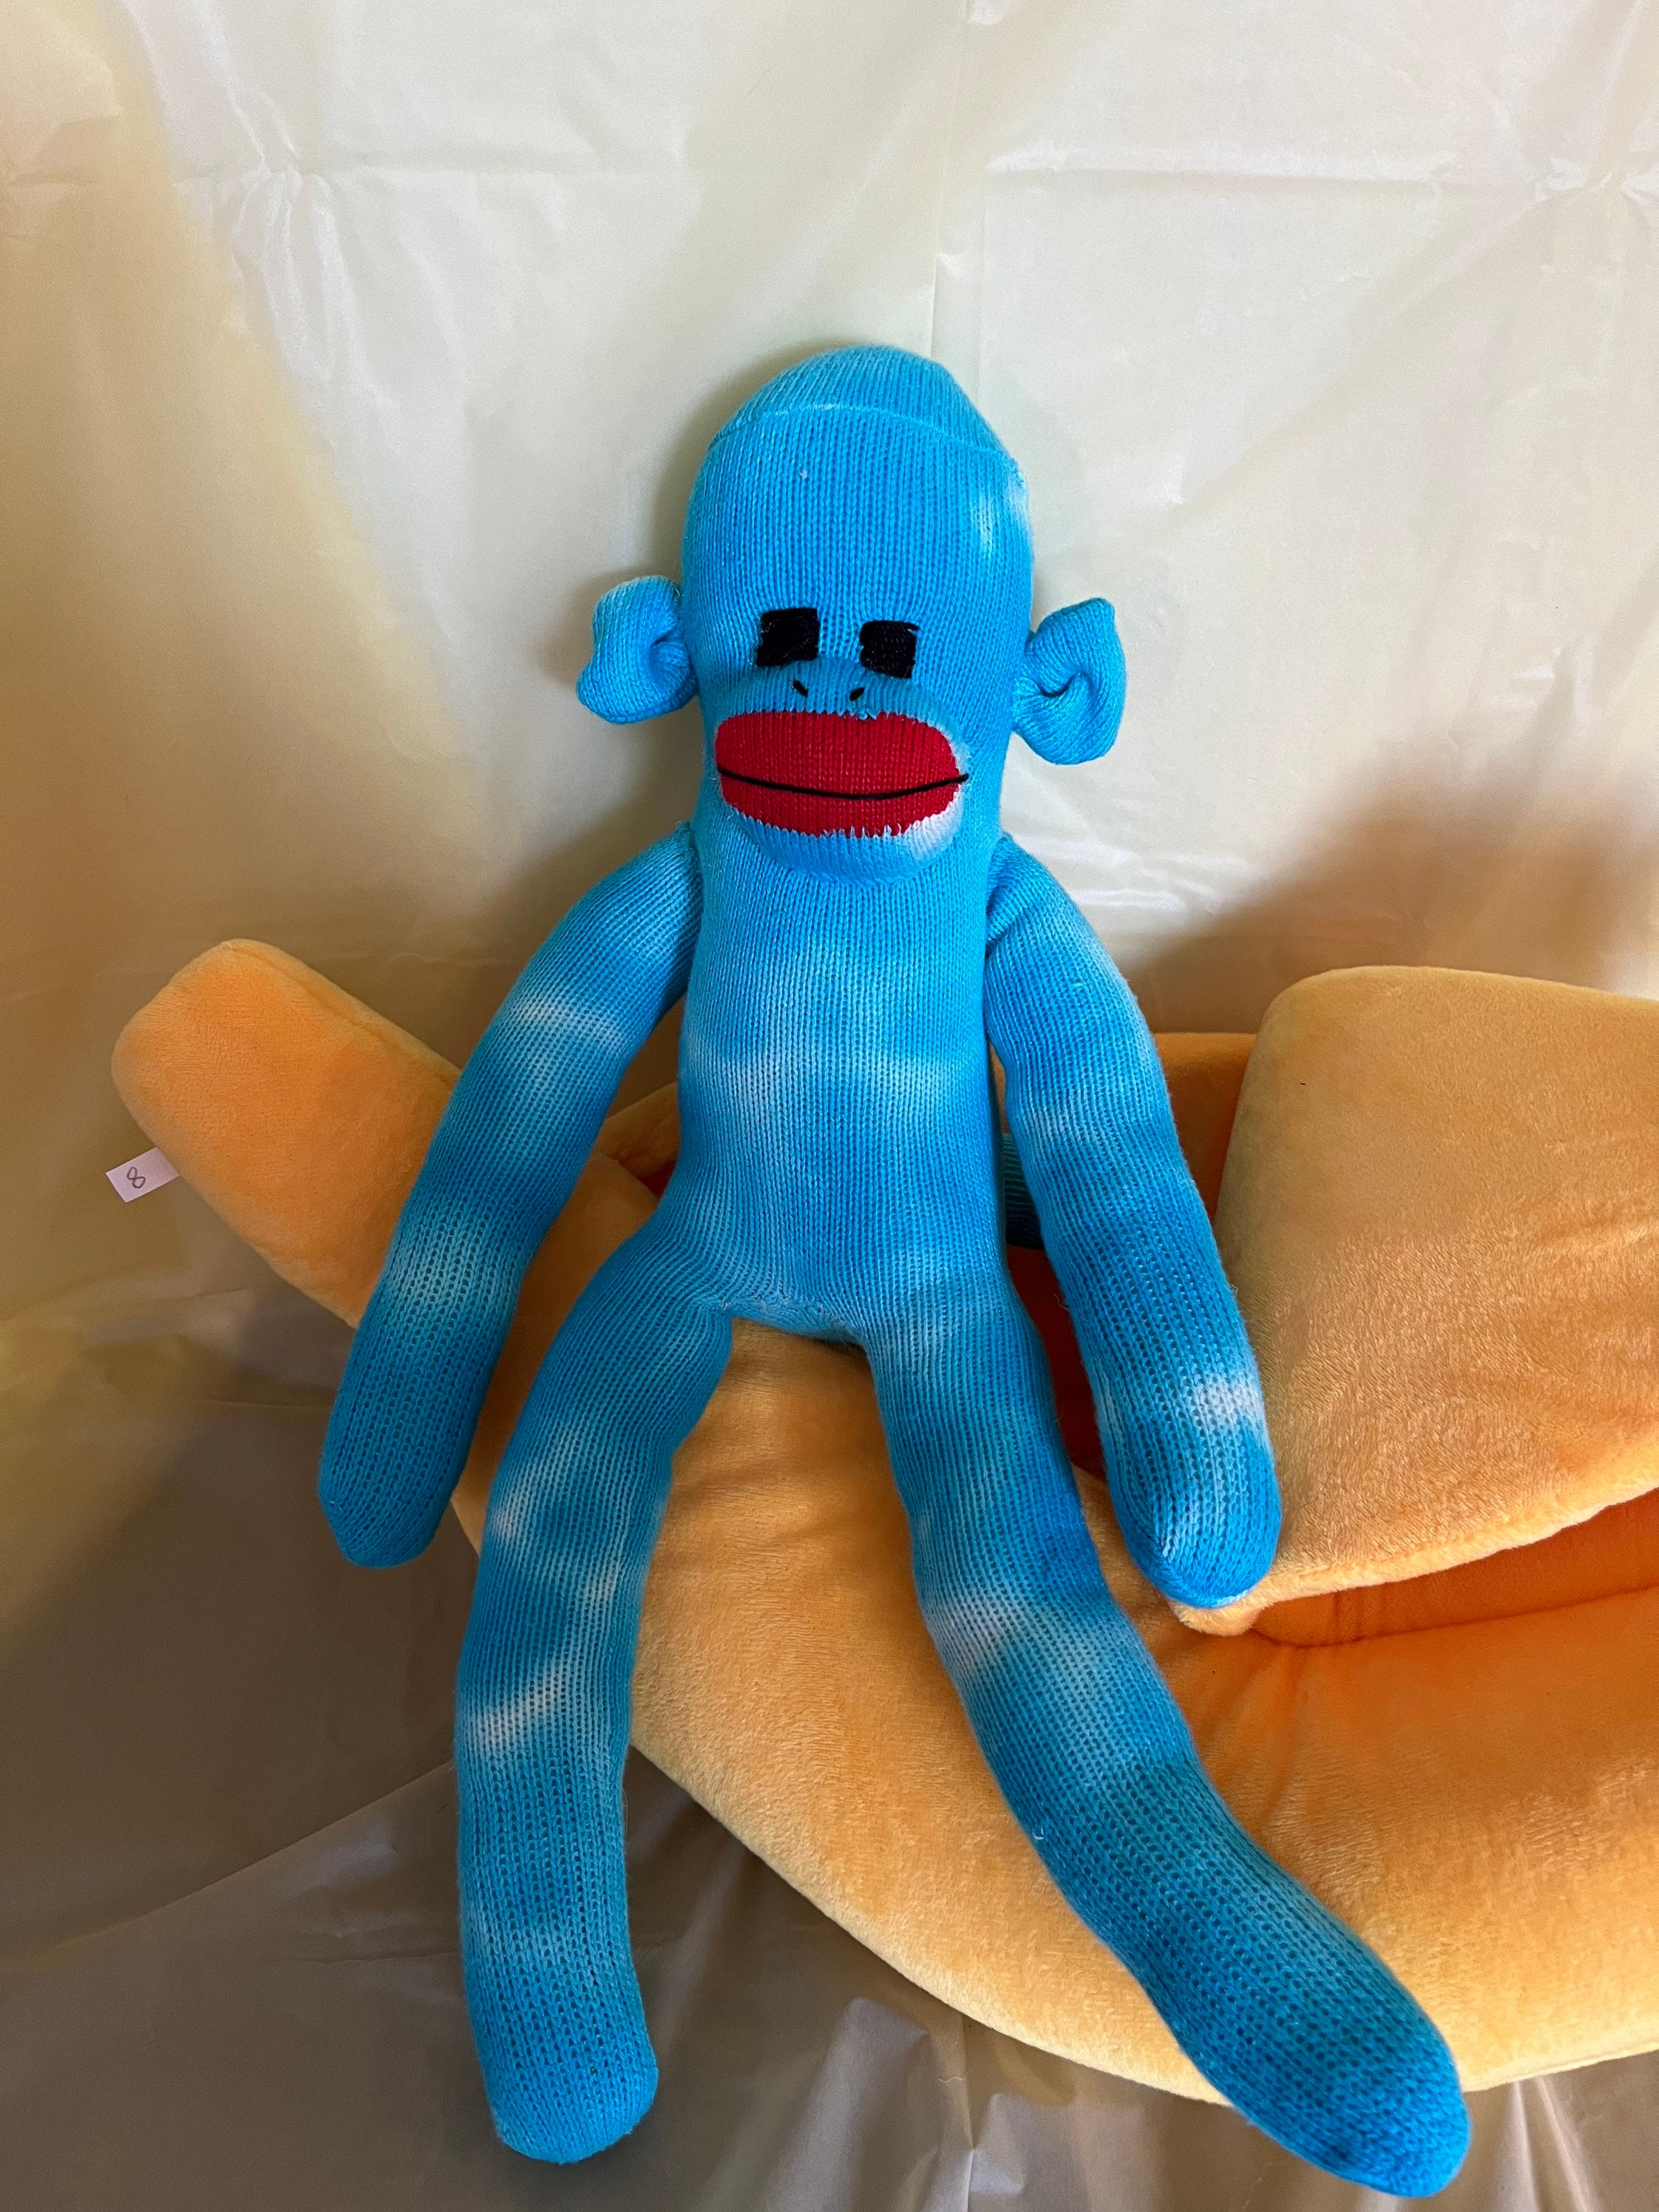 T Shirt Tye Dye – Chocolate Monkey